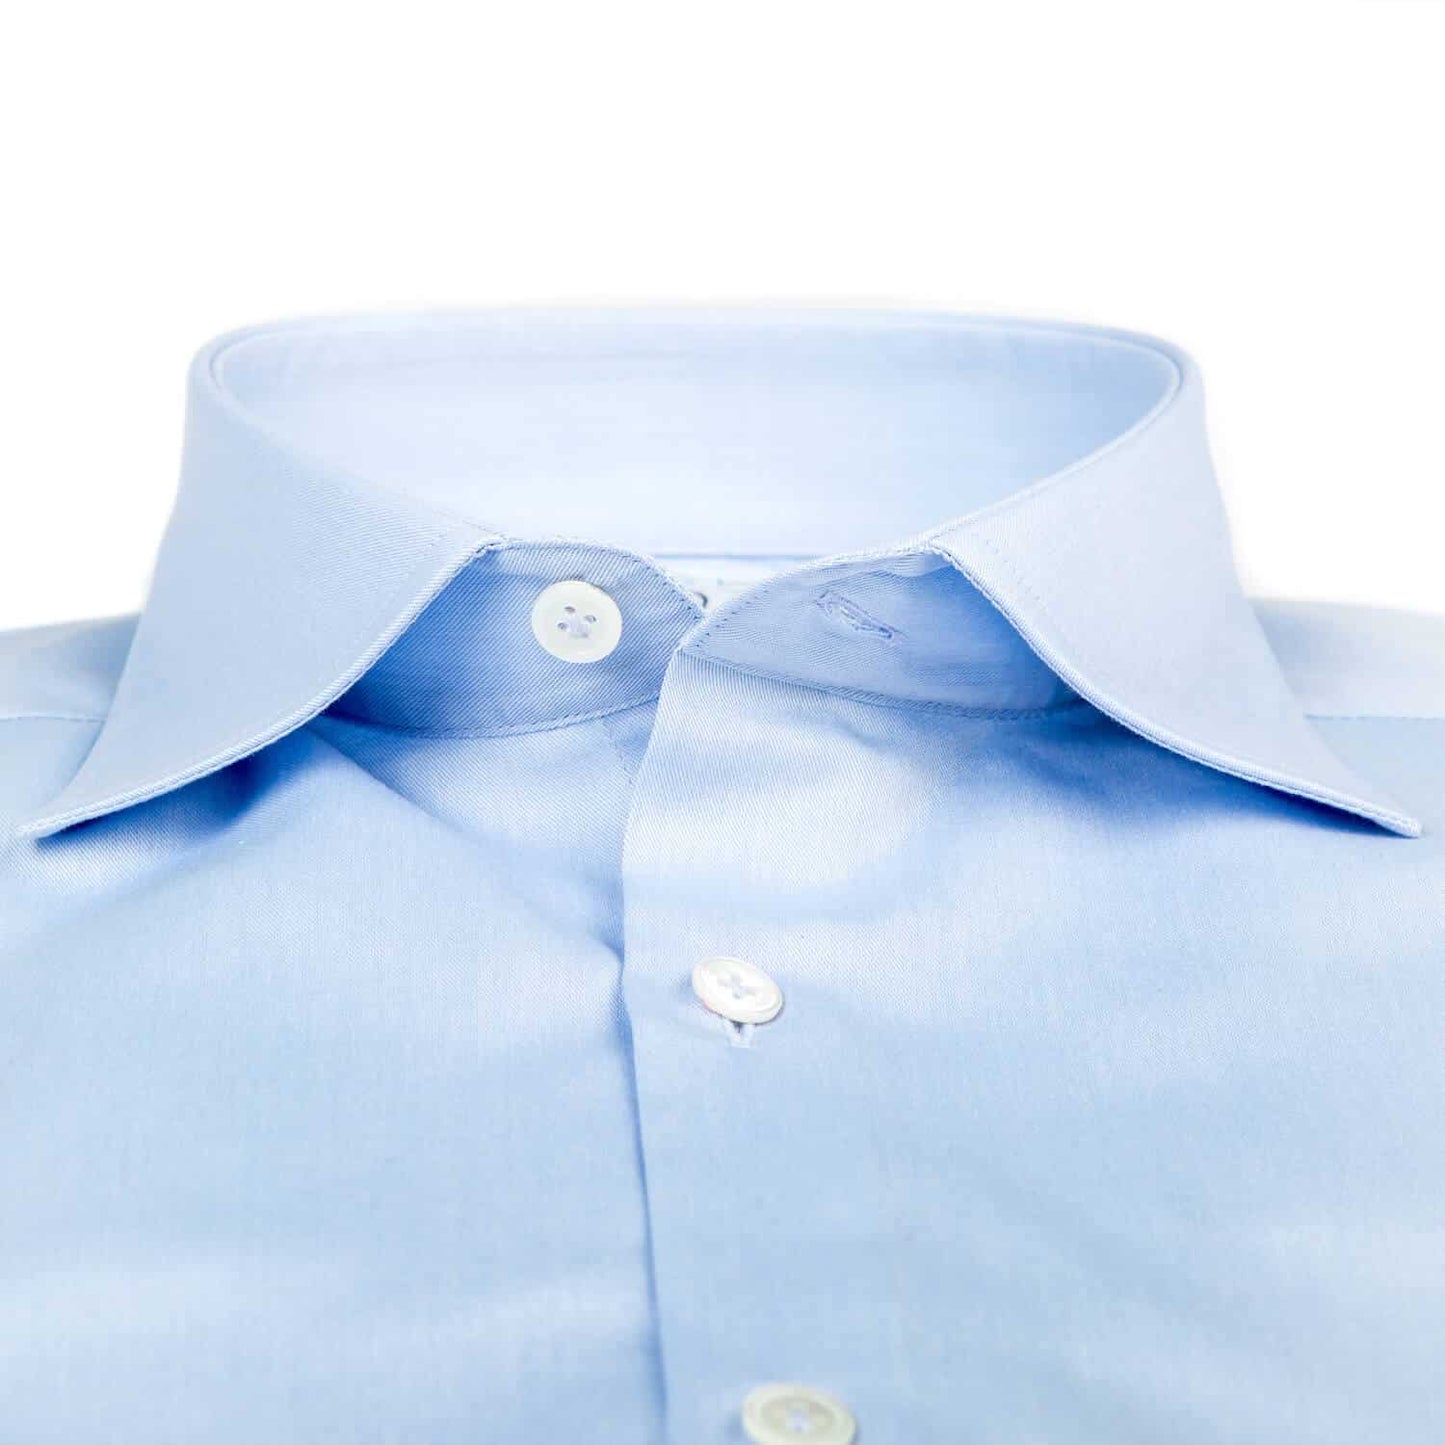 Shirt - Slim Fit - Serious Blue (Last stock)